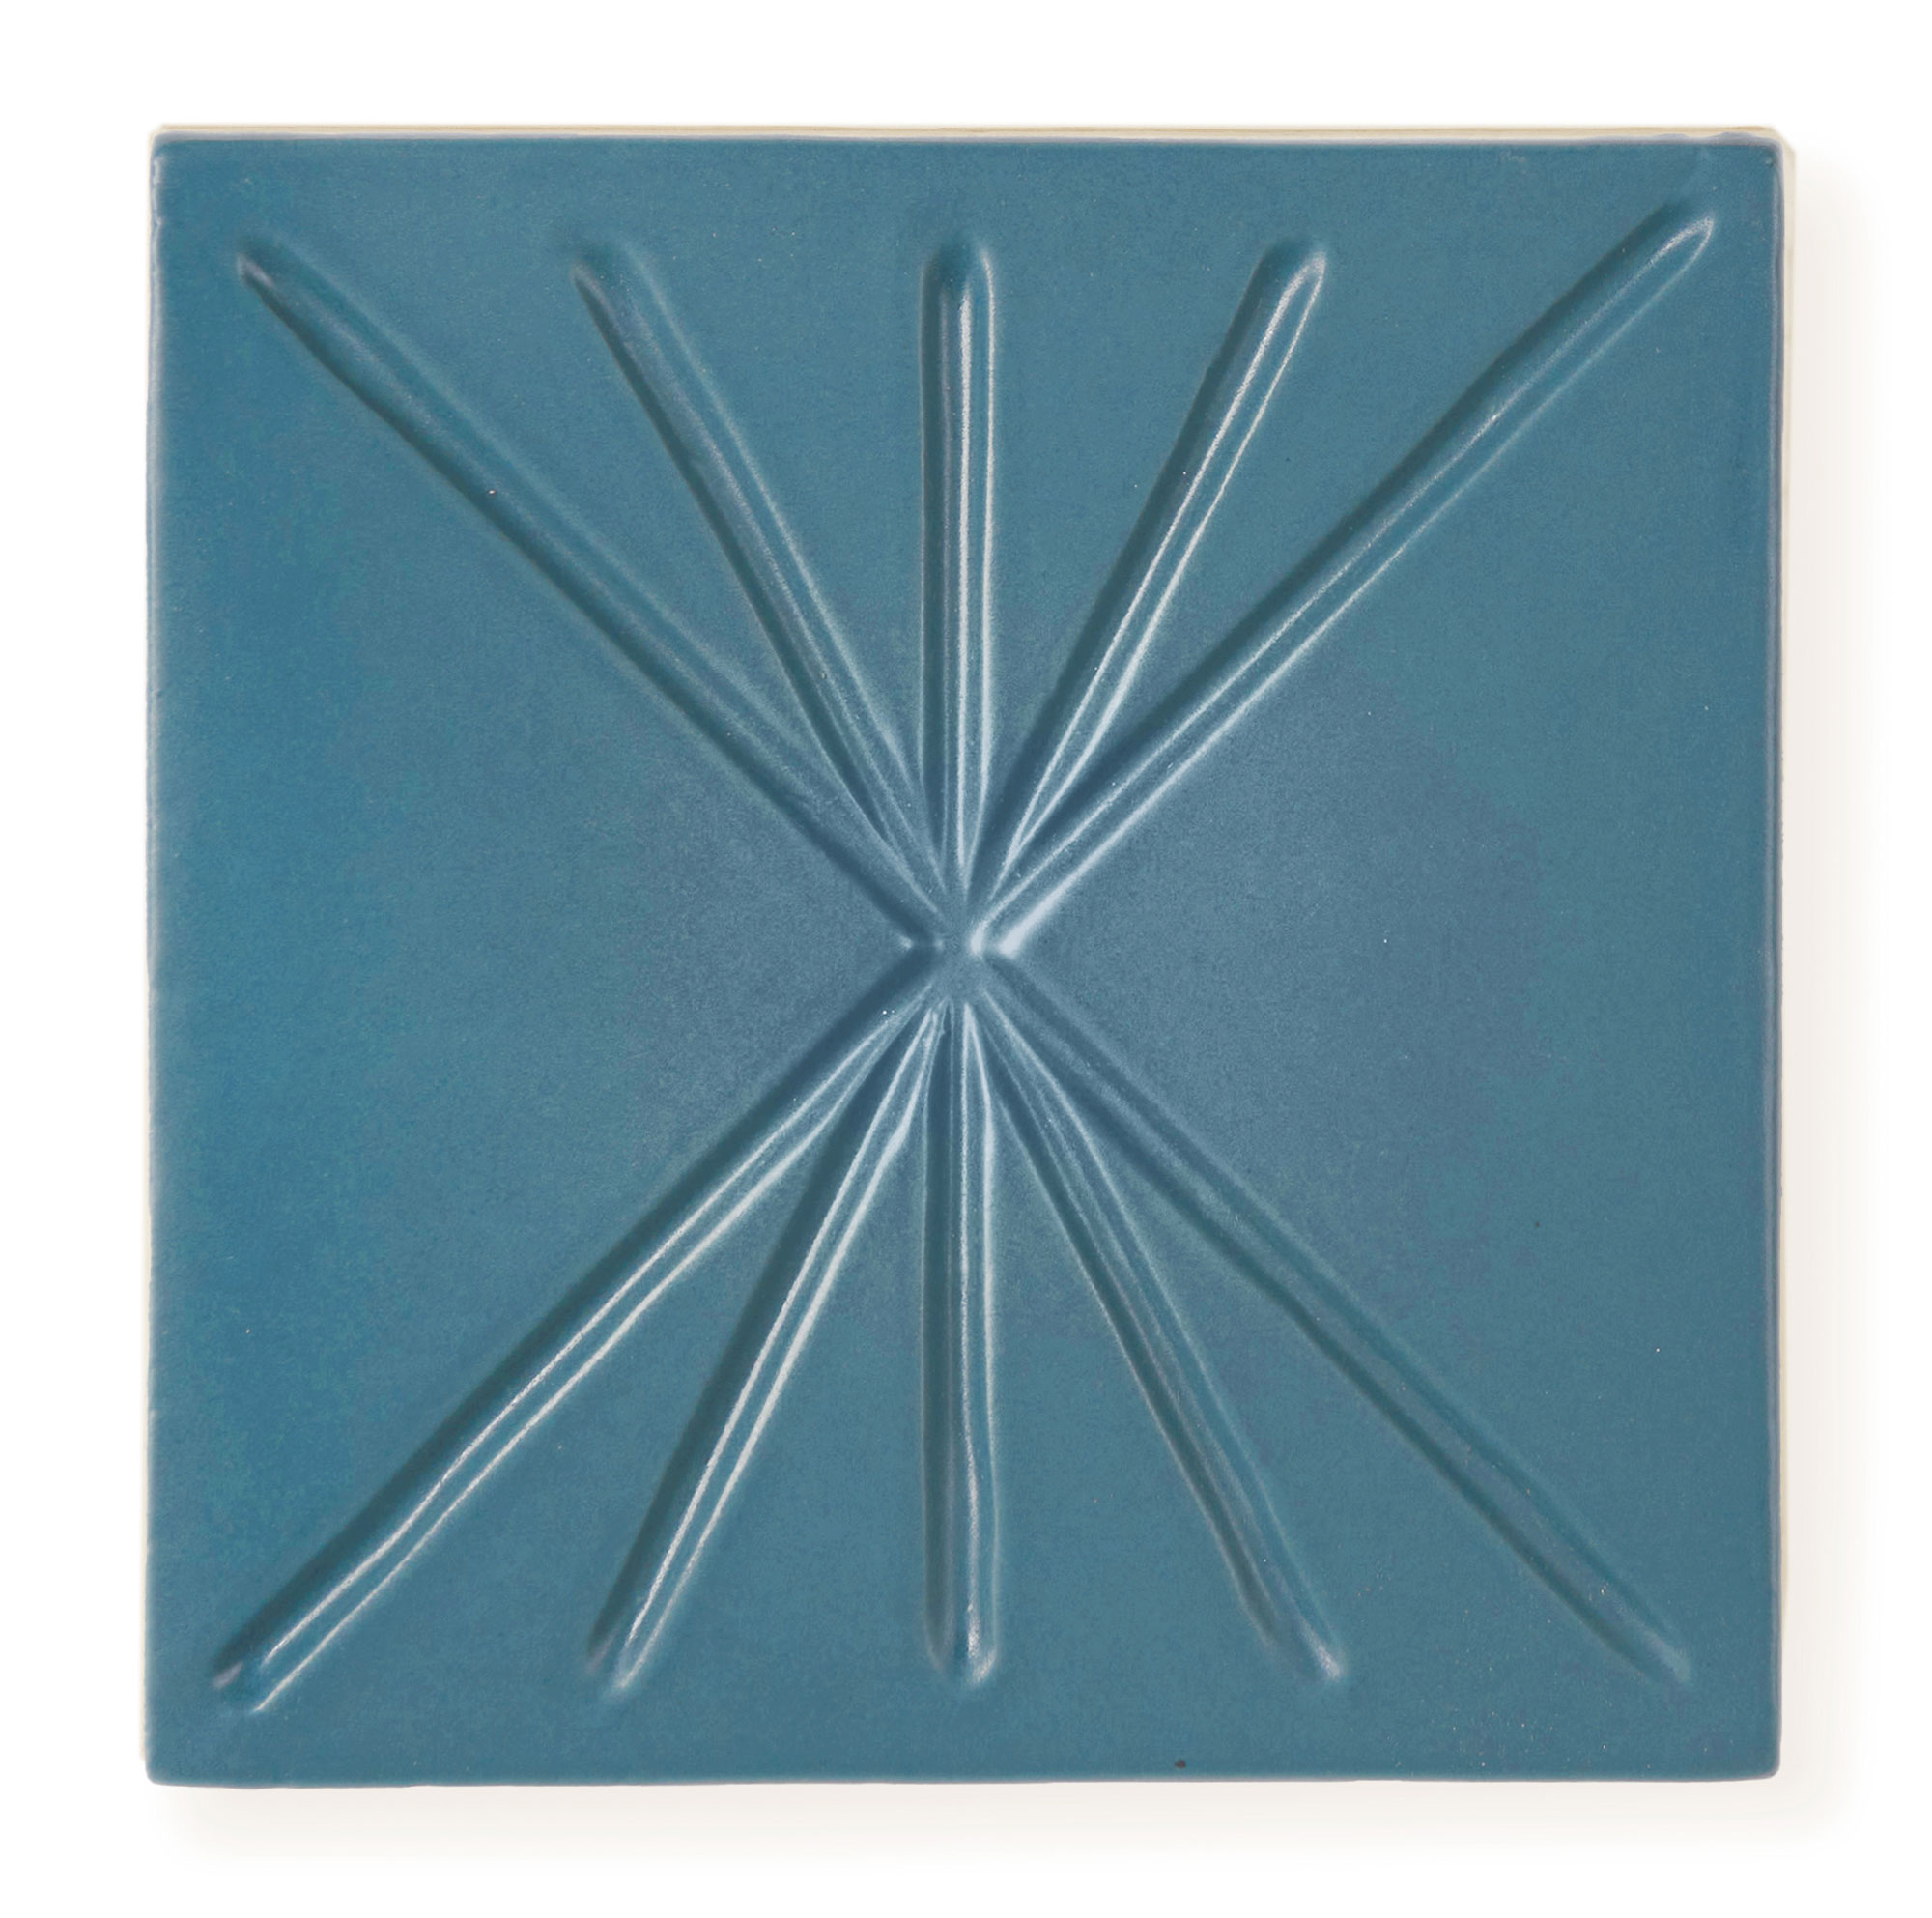 Sample: Tepoz Blue 6x6 - Dimensional Relief Artisan Ceramic Tile